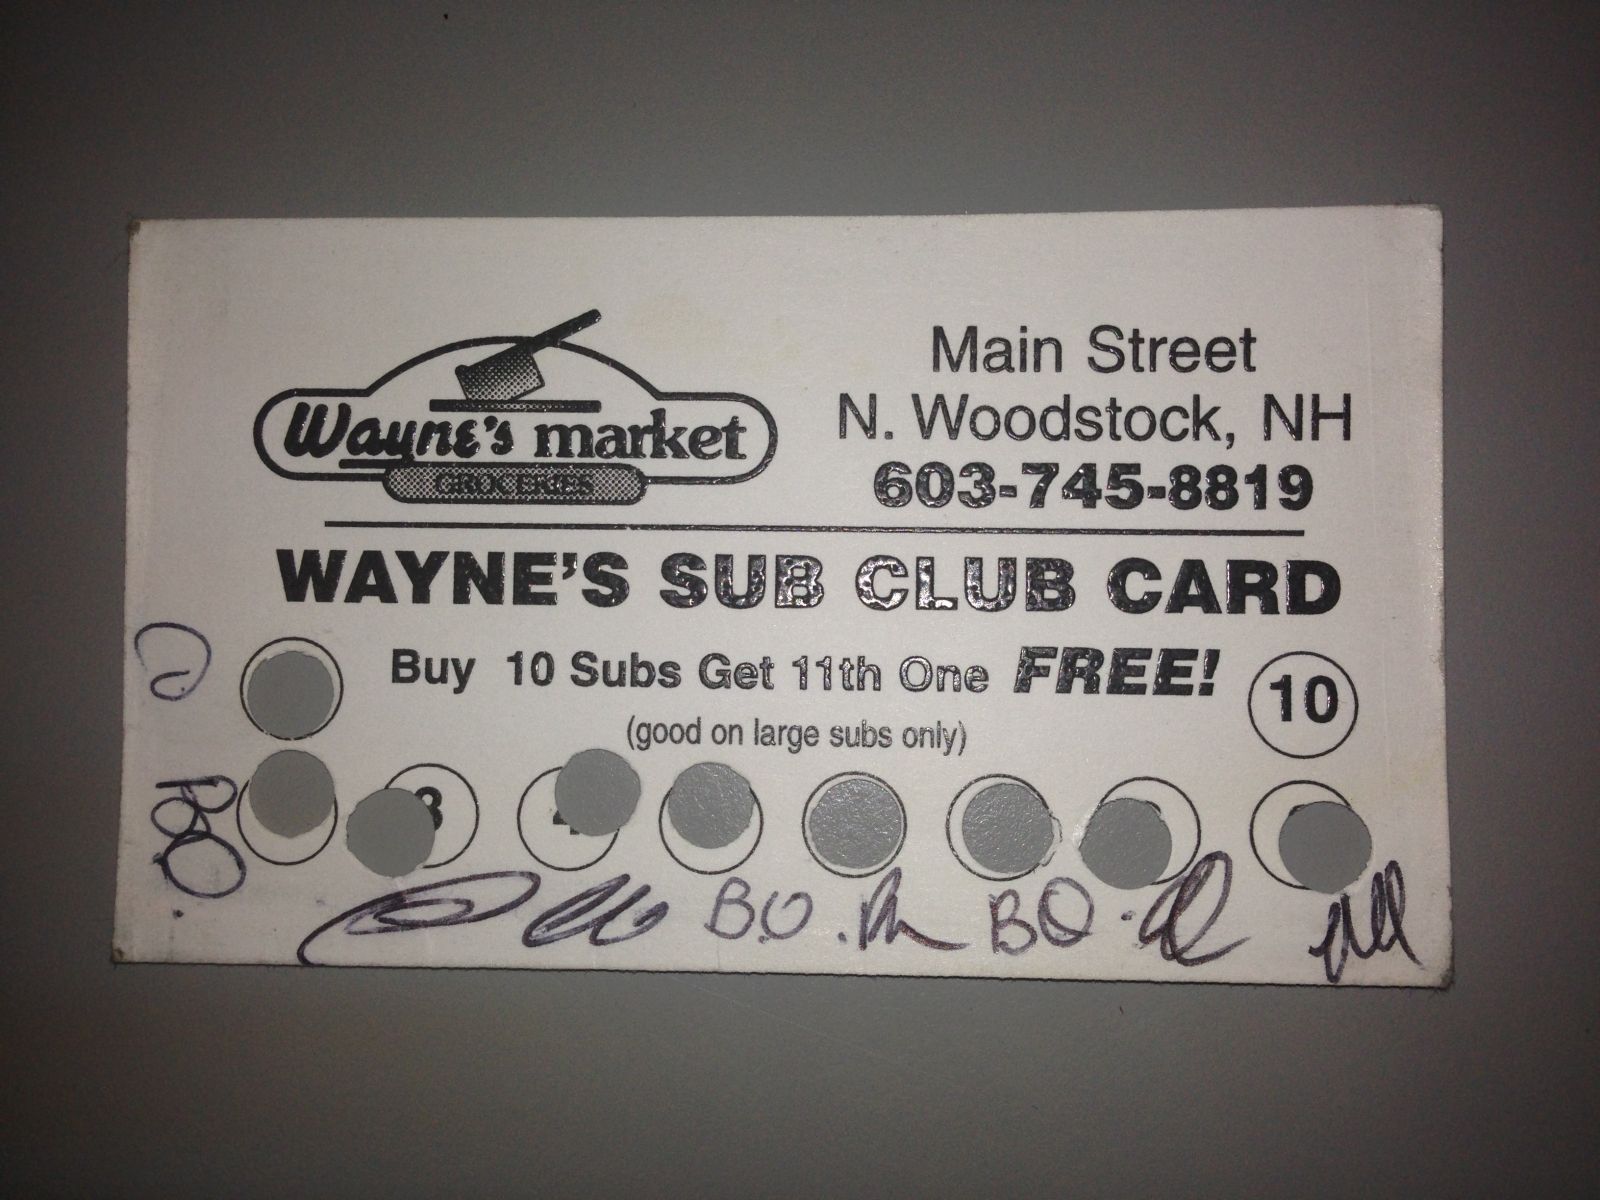 Where to eat, Wayne's Deli, Lincoln, New Hampshire, Loon Mountain